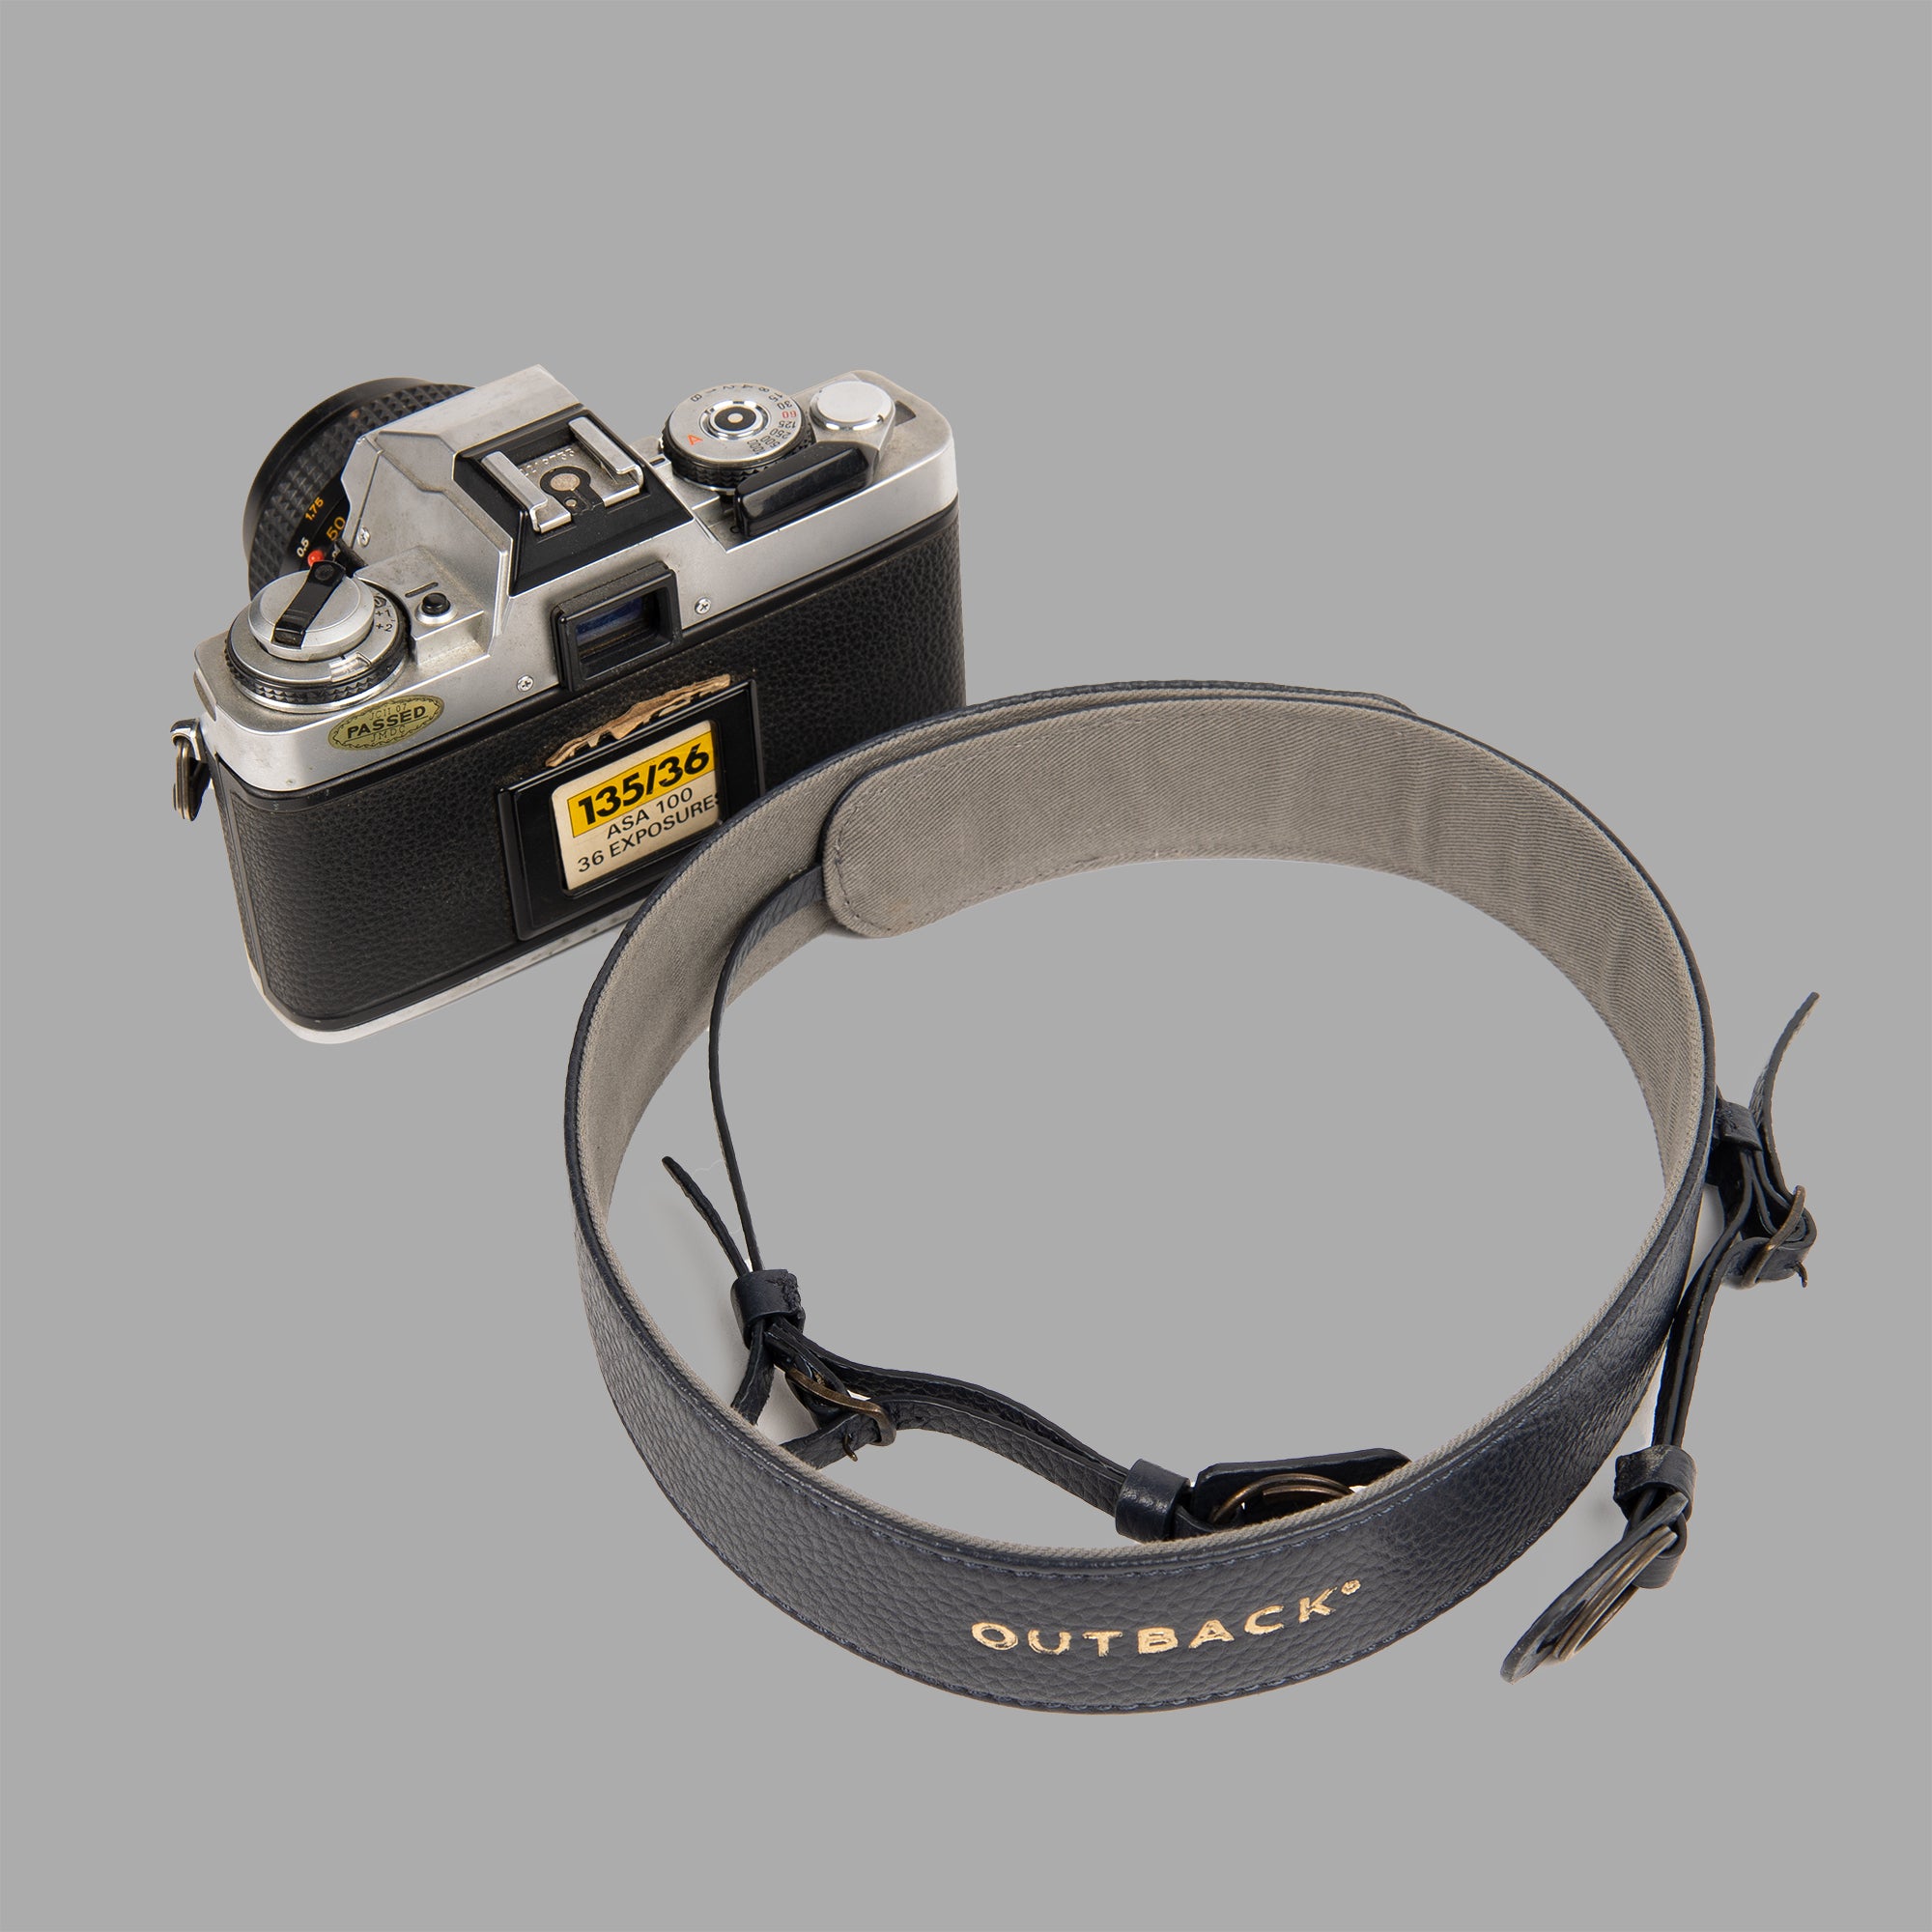 DSLR Camera Leather Strap